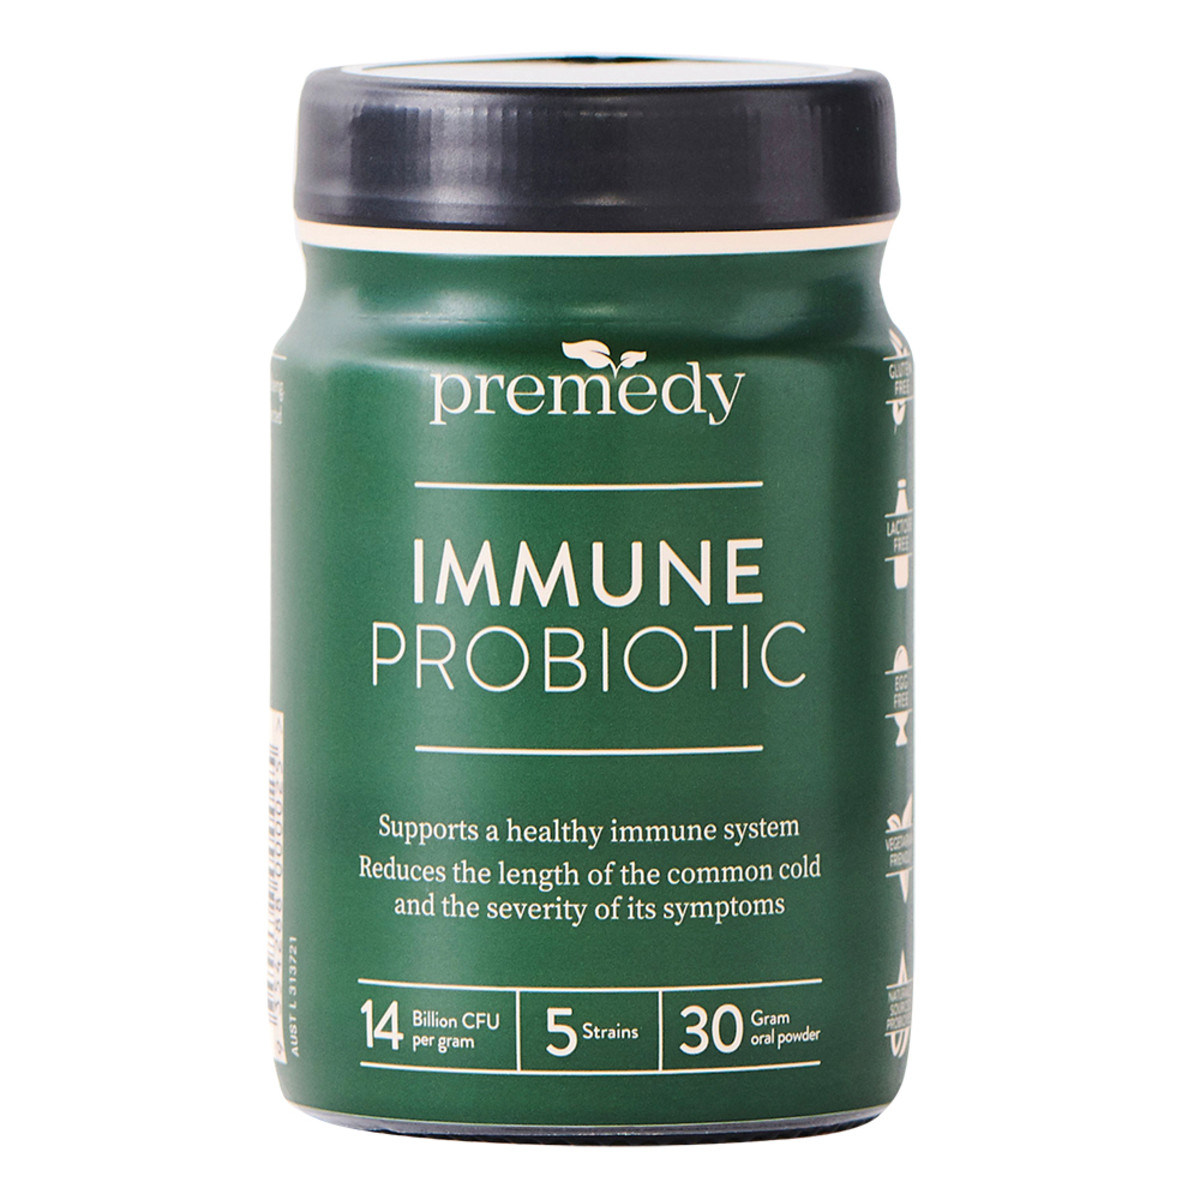 Premedy Immune Probiotic